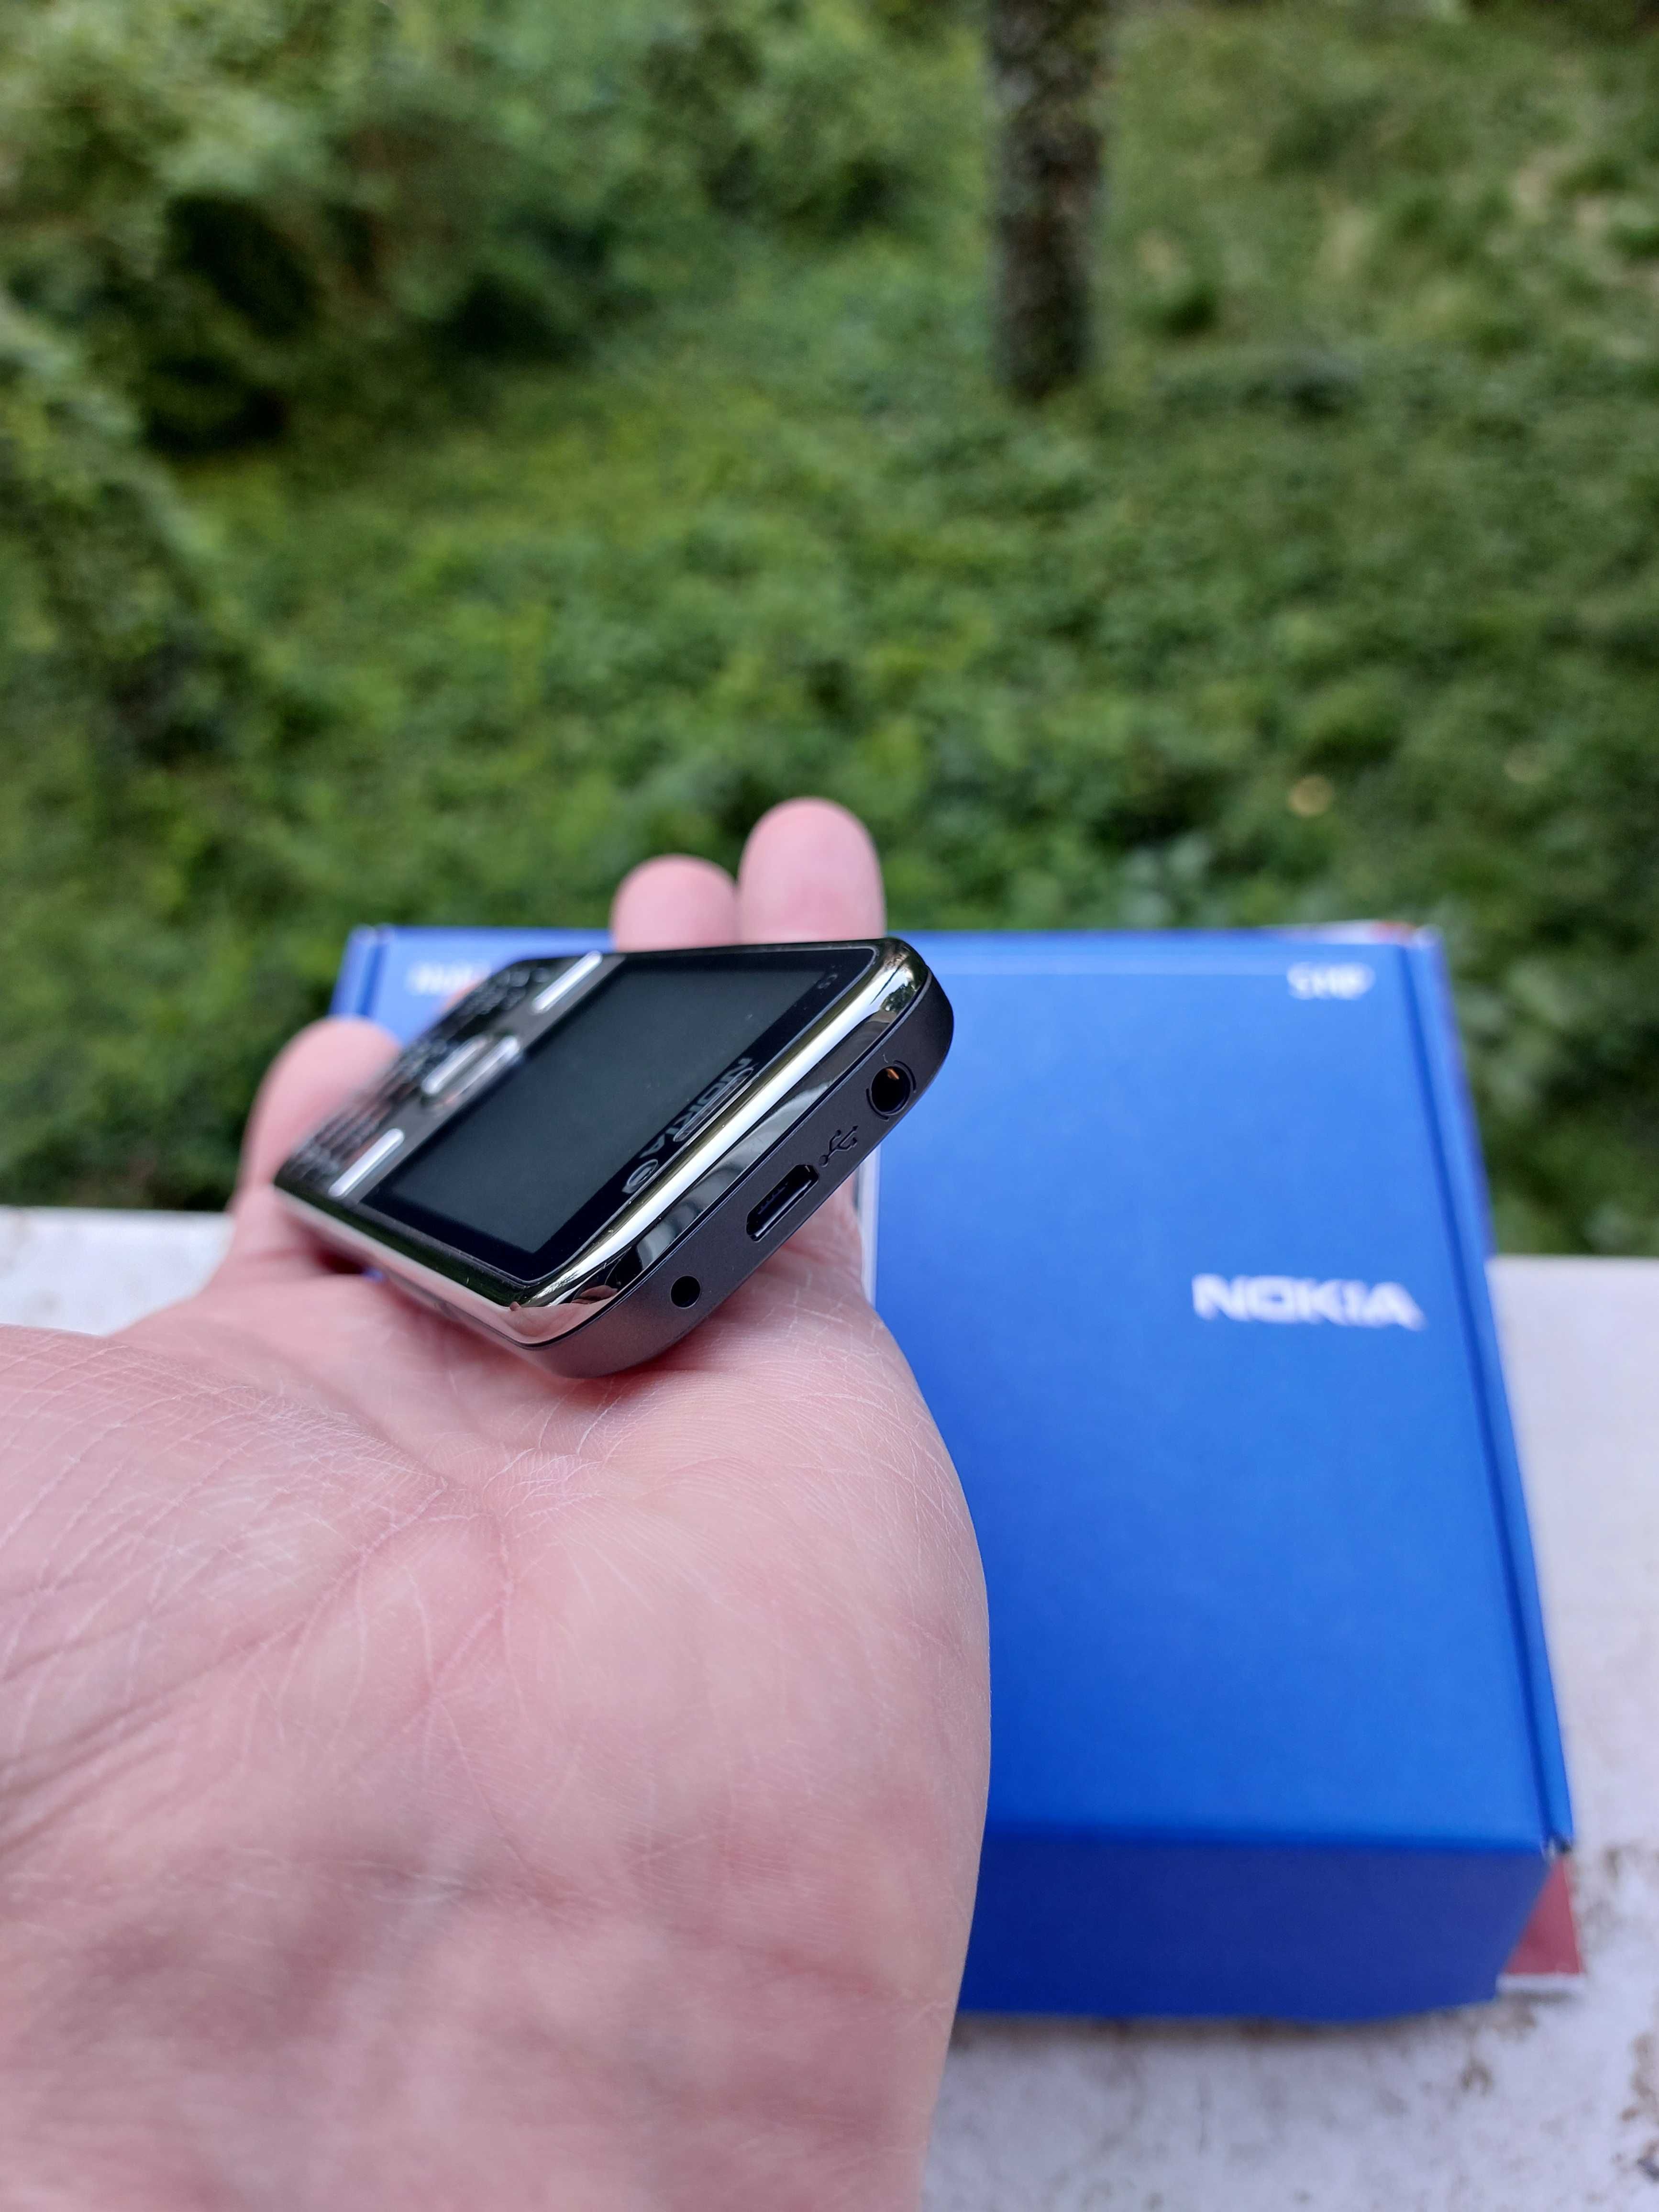 Nokia C5 Nou decodat orig Ungaria la cutie doar 36 min vorbit pe el